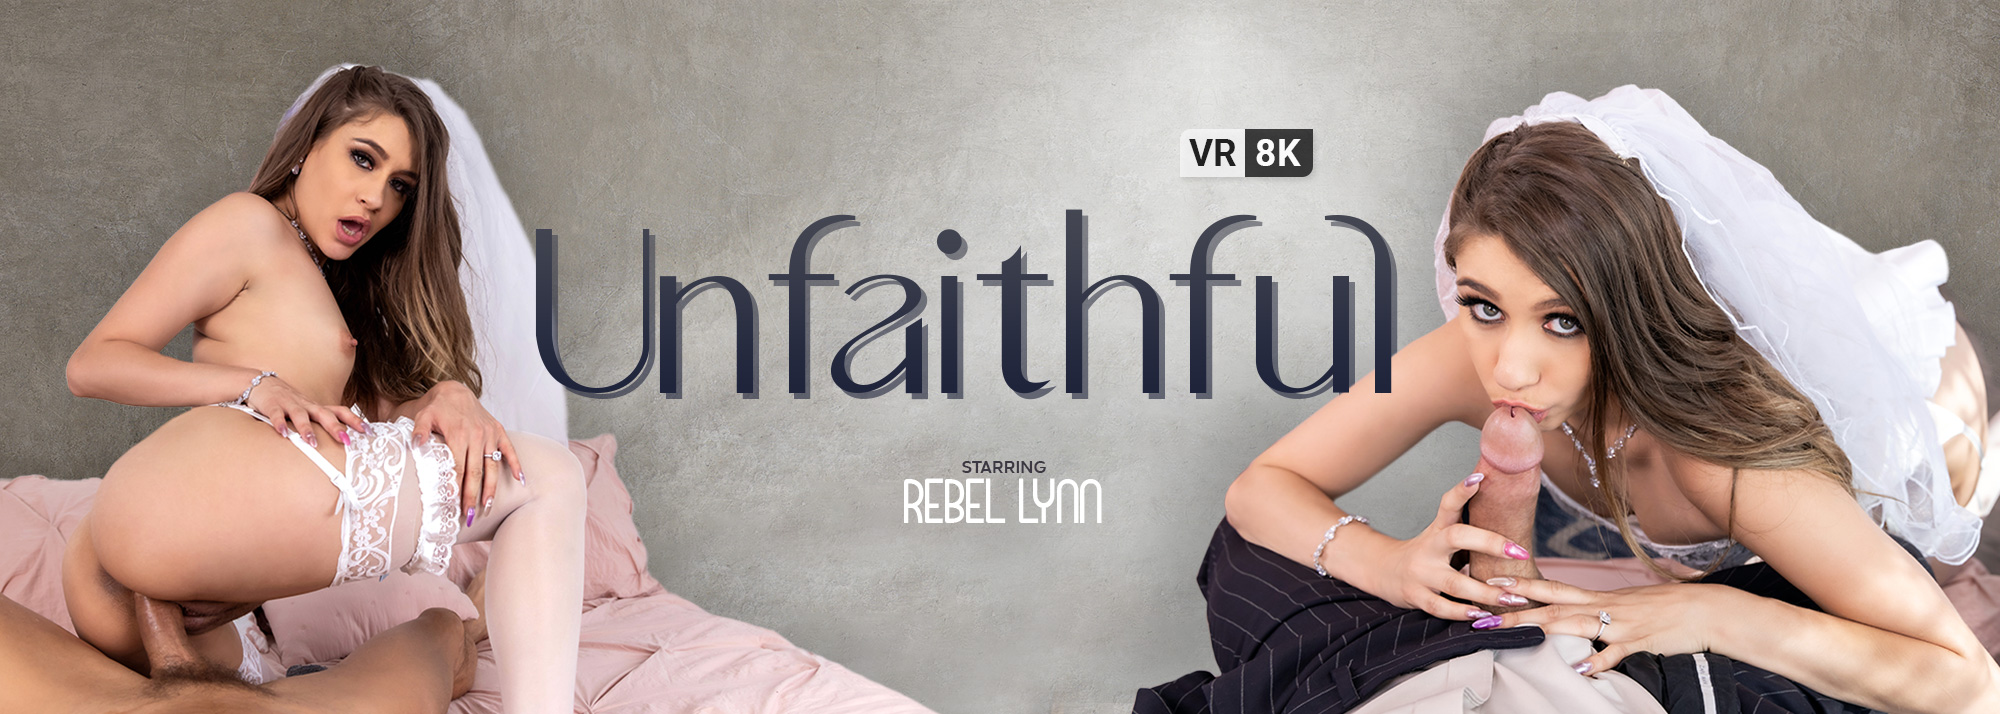 Unfaithful with Rebel Lynn  Slideshow